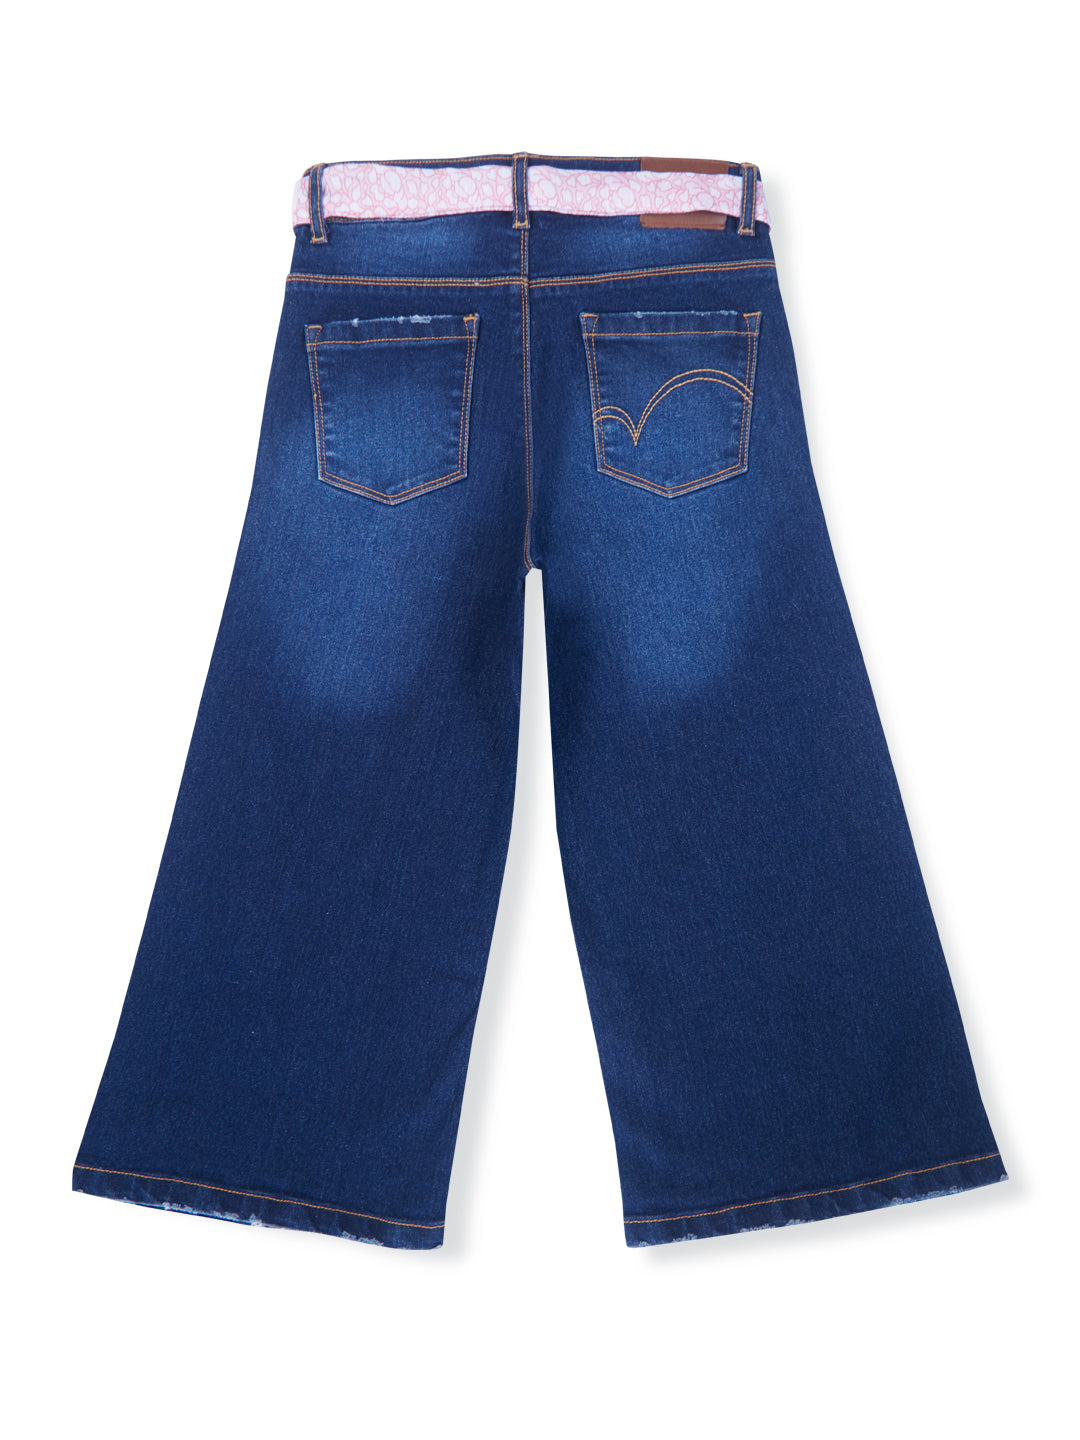 Girls blue denim culotte pants